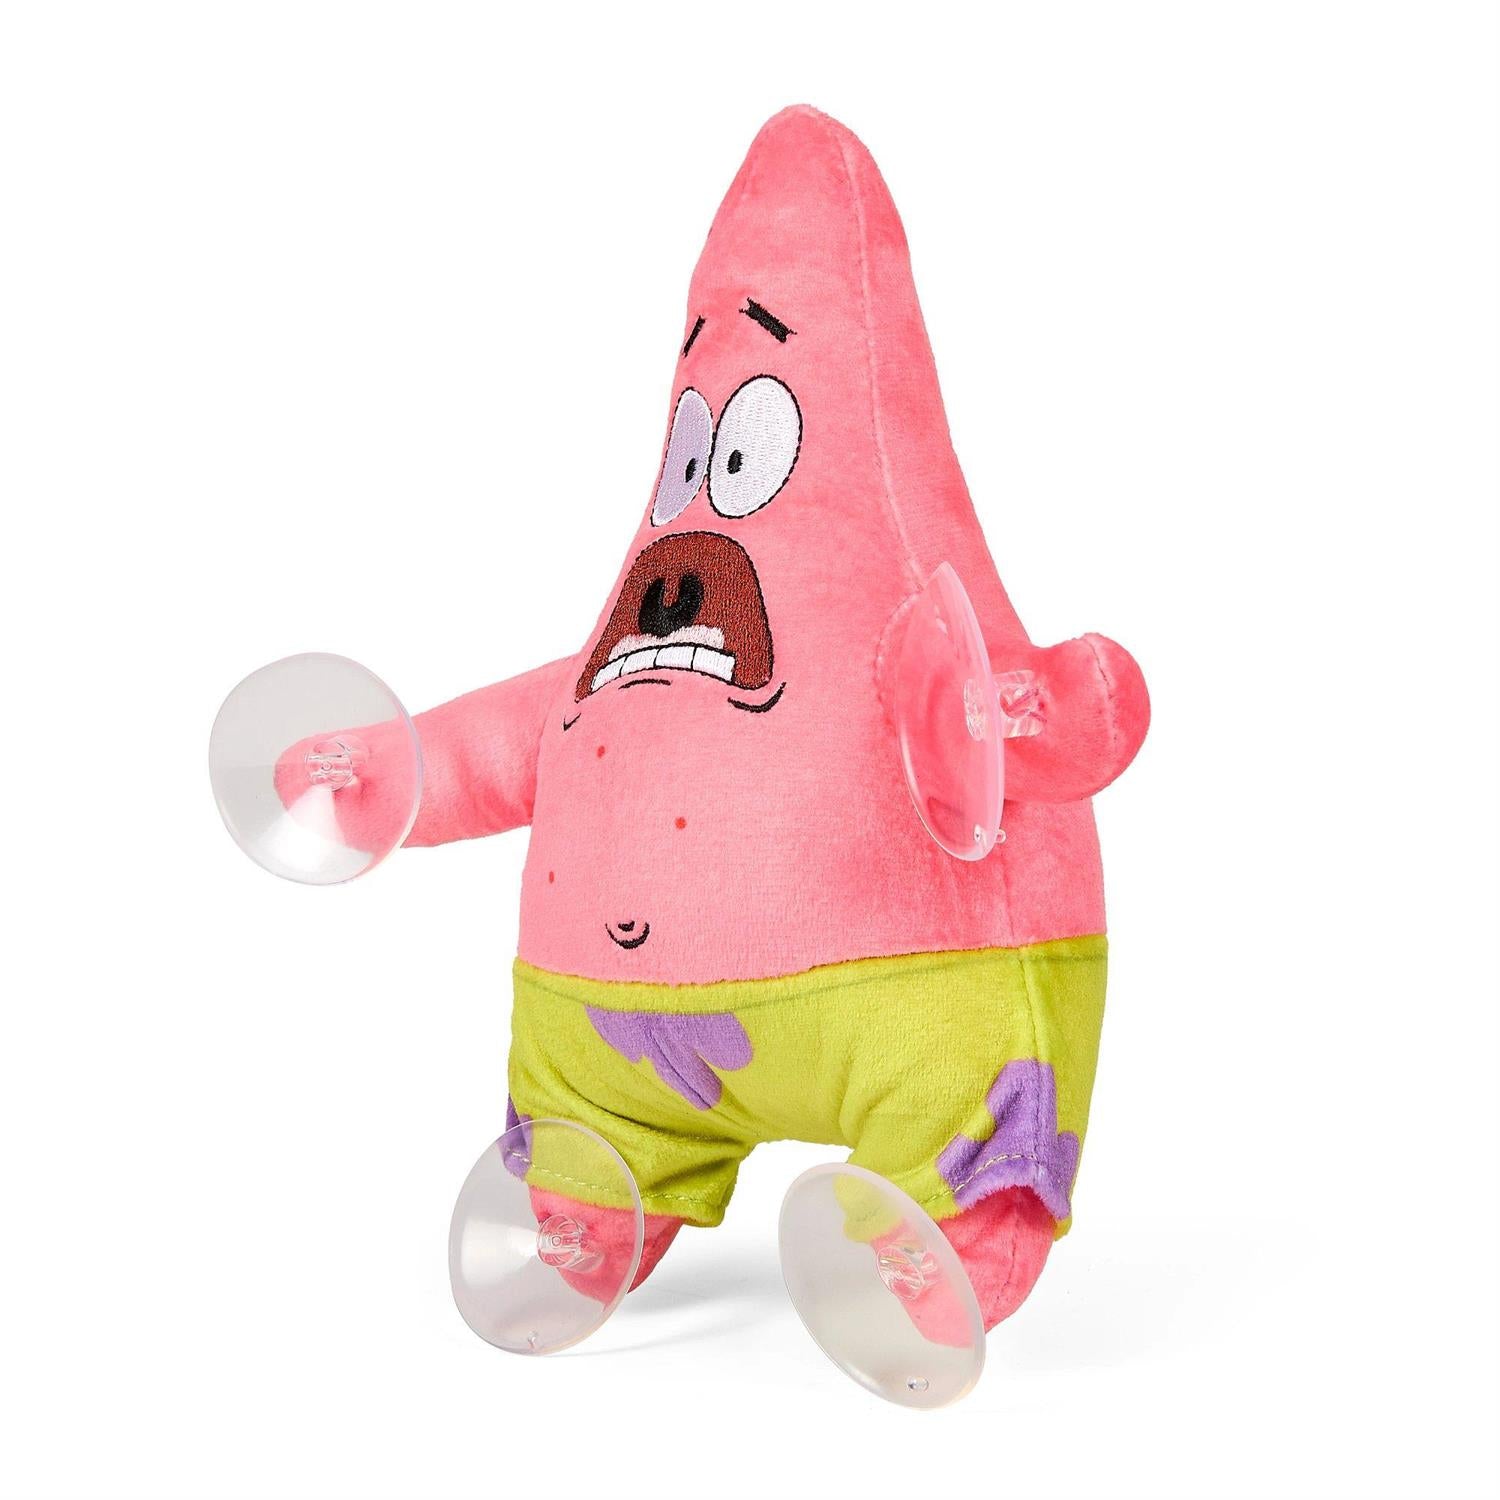 Patrick from SpongeBob Plush Window Clinger